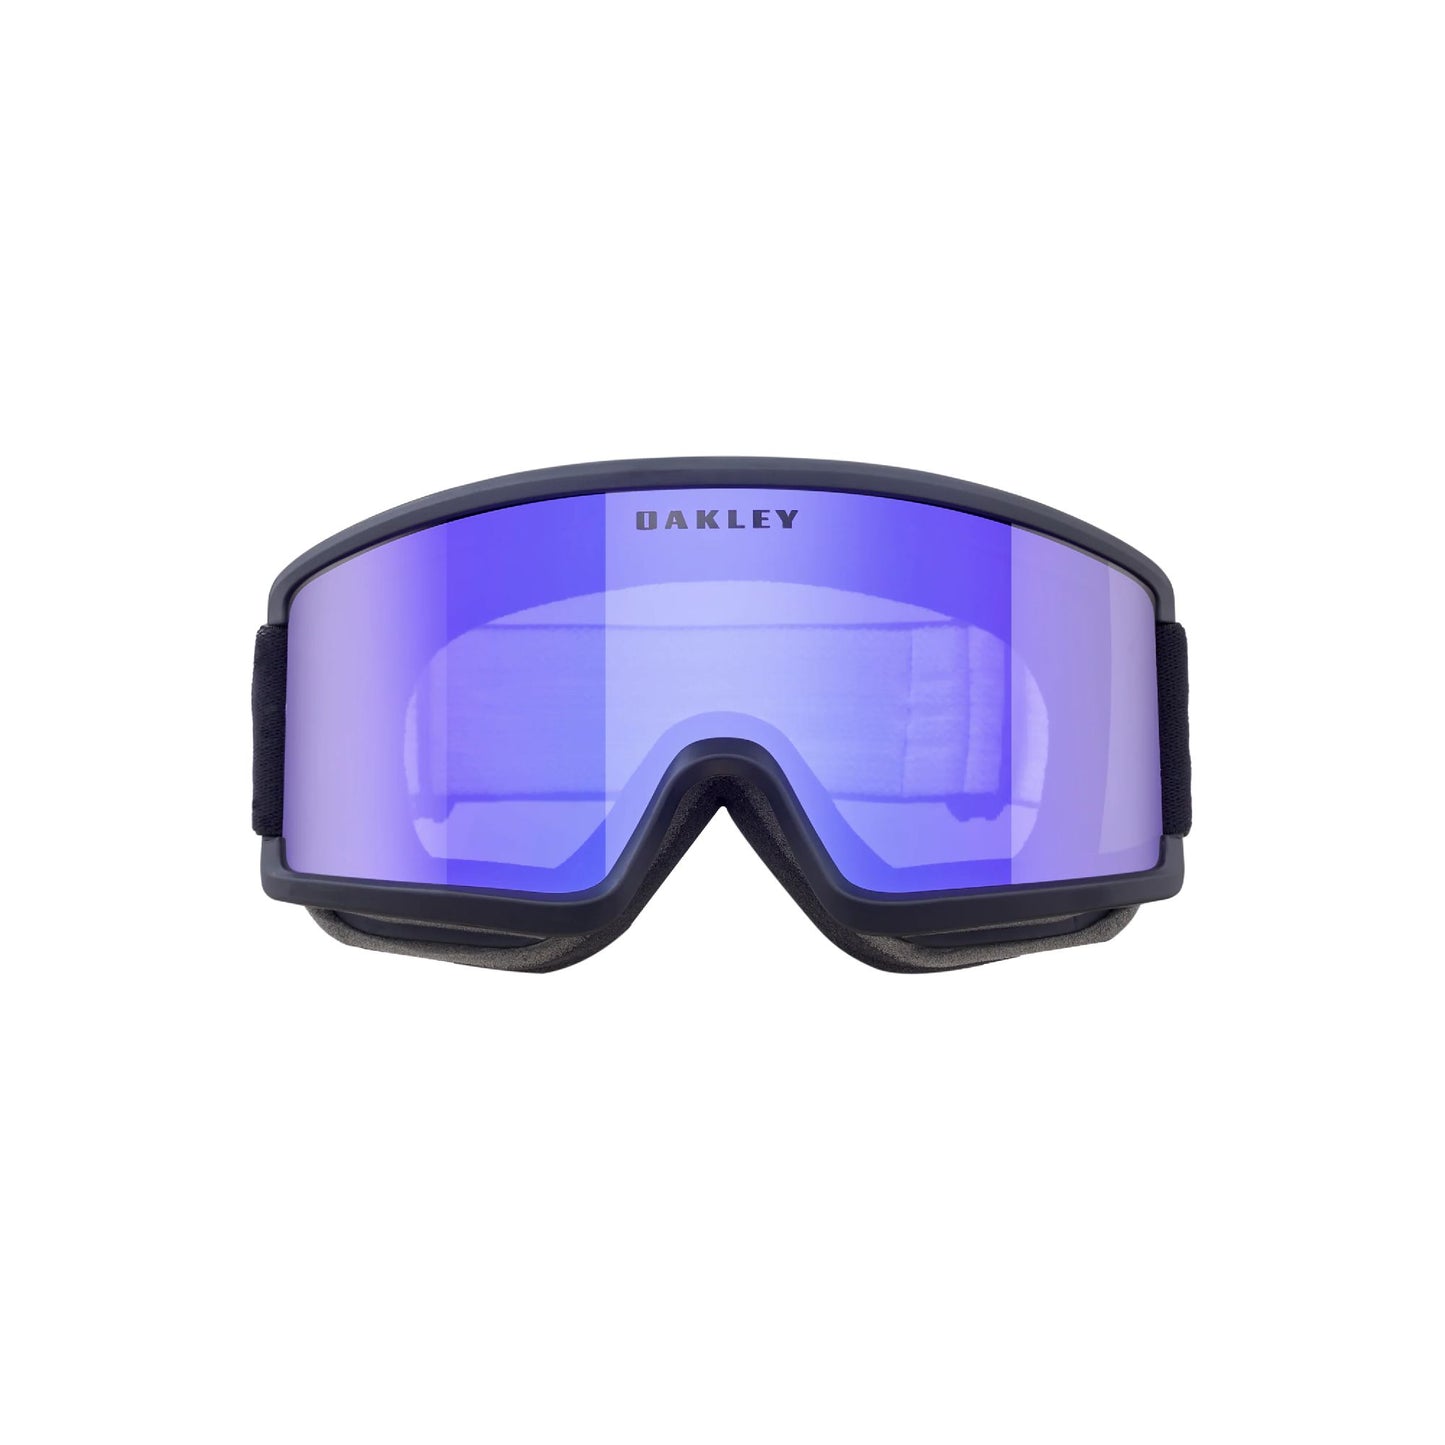 Oakley Youth Target Line S Snow Goggles Matte Black / Violet Iridium Snow Goggles